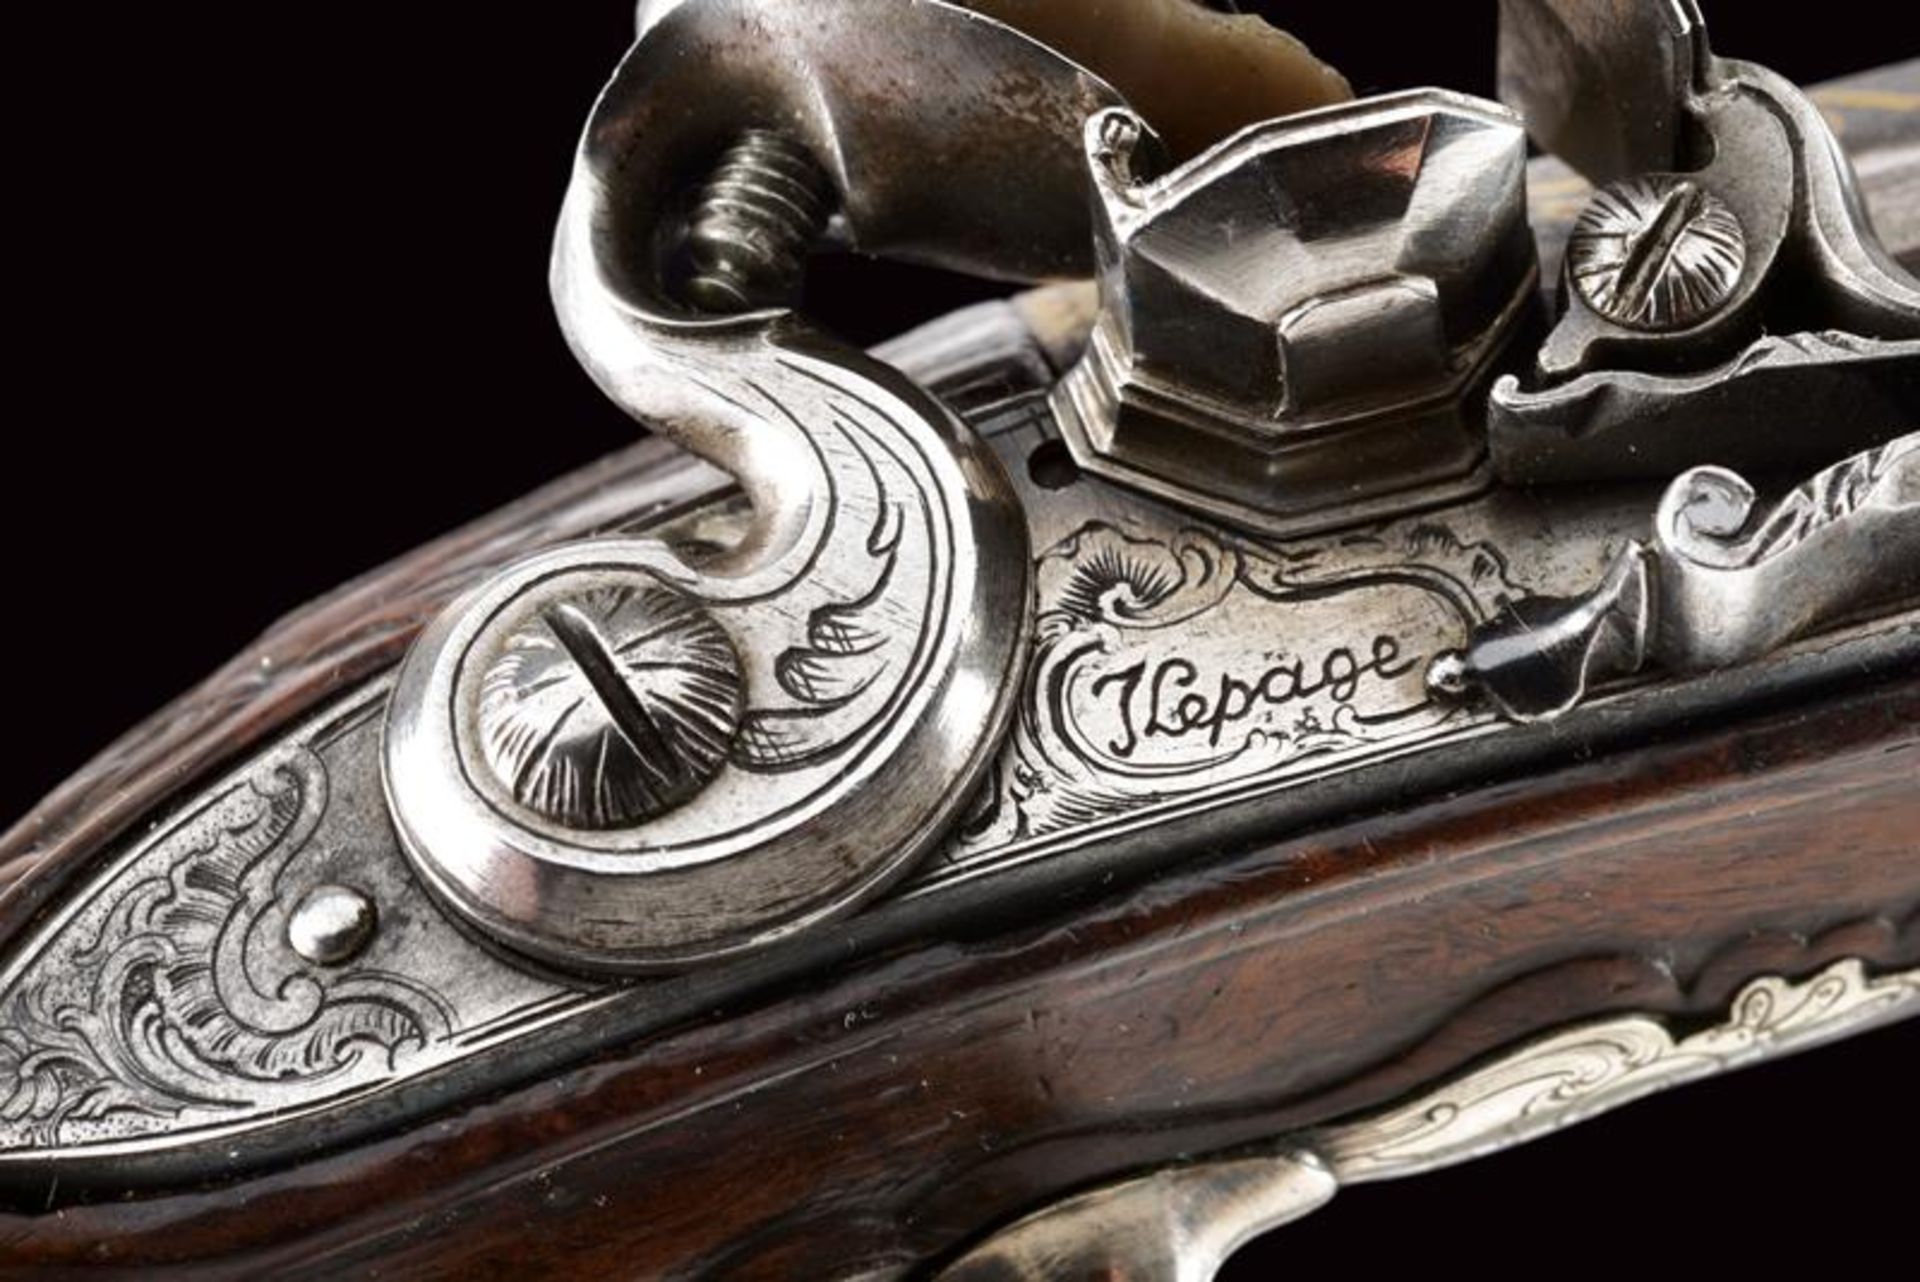 A pair of beautiful traveling flintlock pistols by Jean Lepage - Image 5 of 8